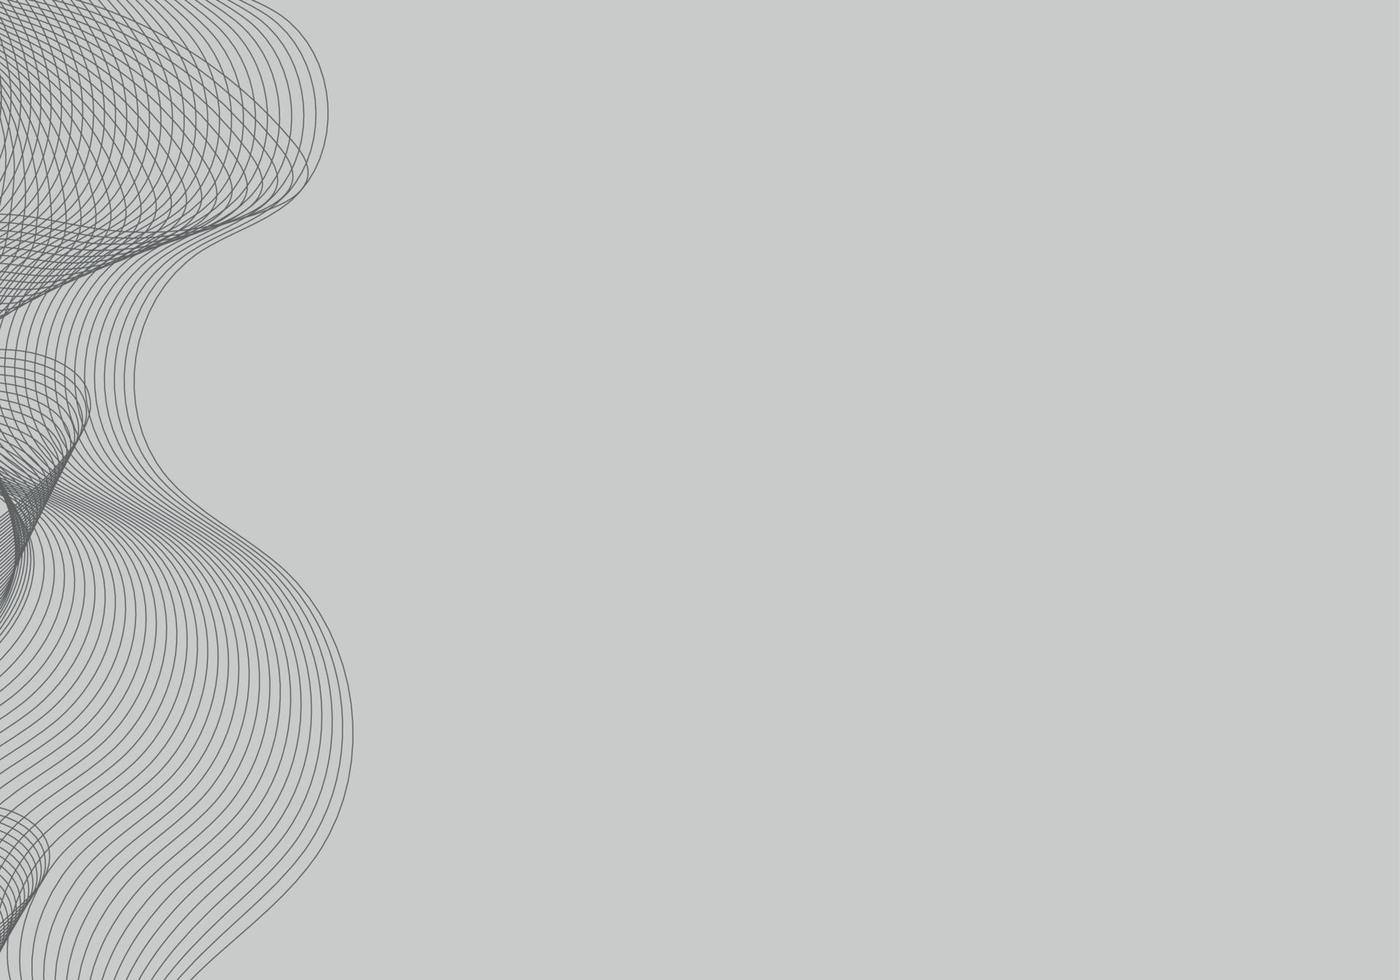 Abstract vector circle halftone black background. Gradient retro line pattern design. Monochrome graphic.